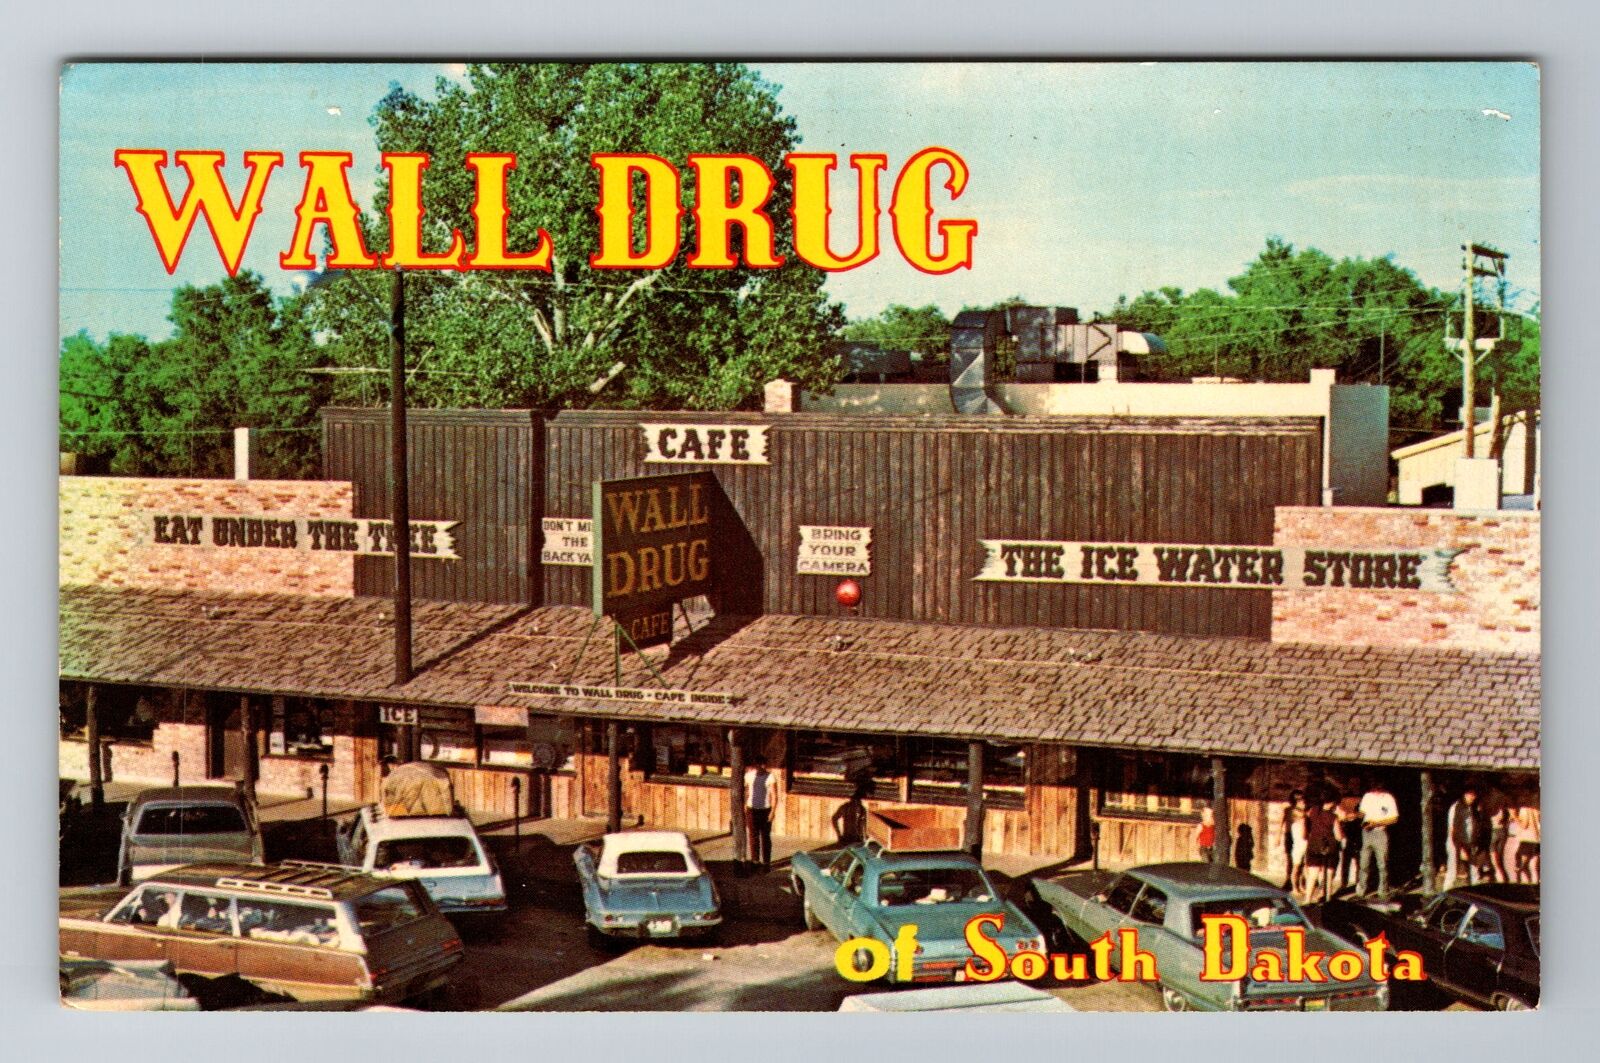 Wall SD-South Dakota, Wall Drugstore, Café Advertising, Vintage Postcard